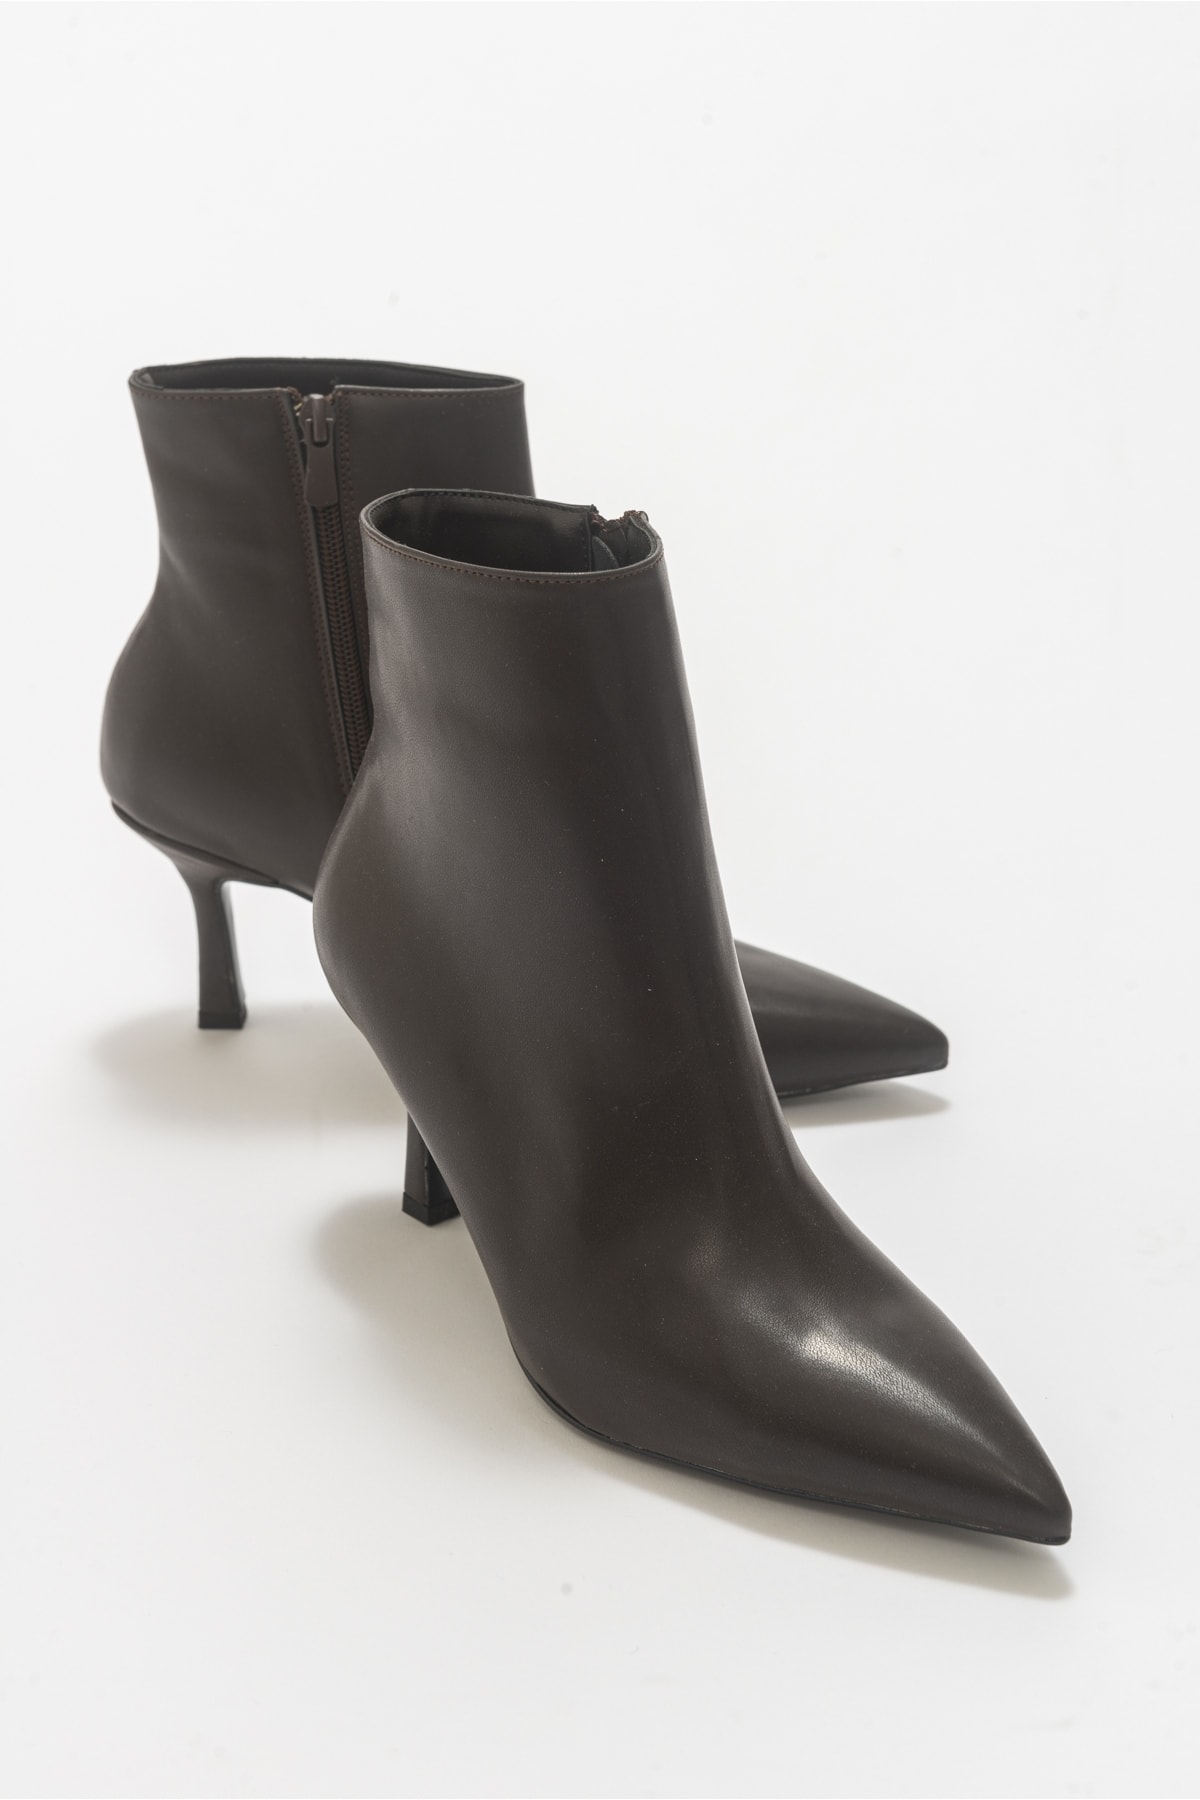 LuviShoes Raison Brown Women's Boots